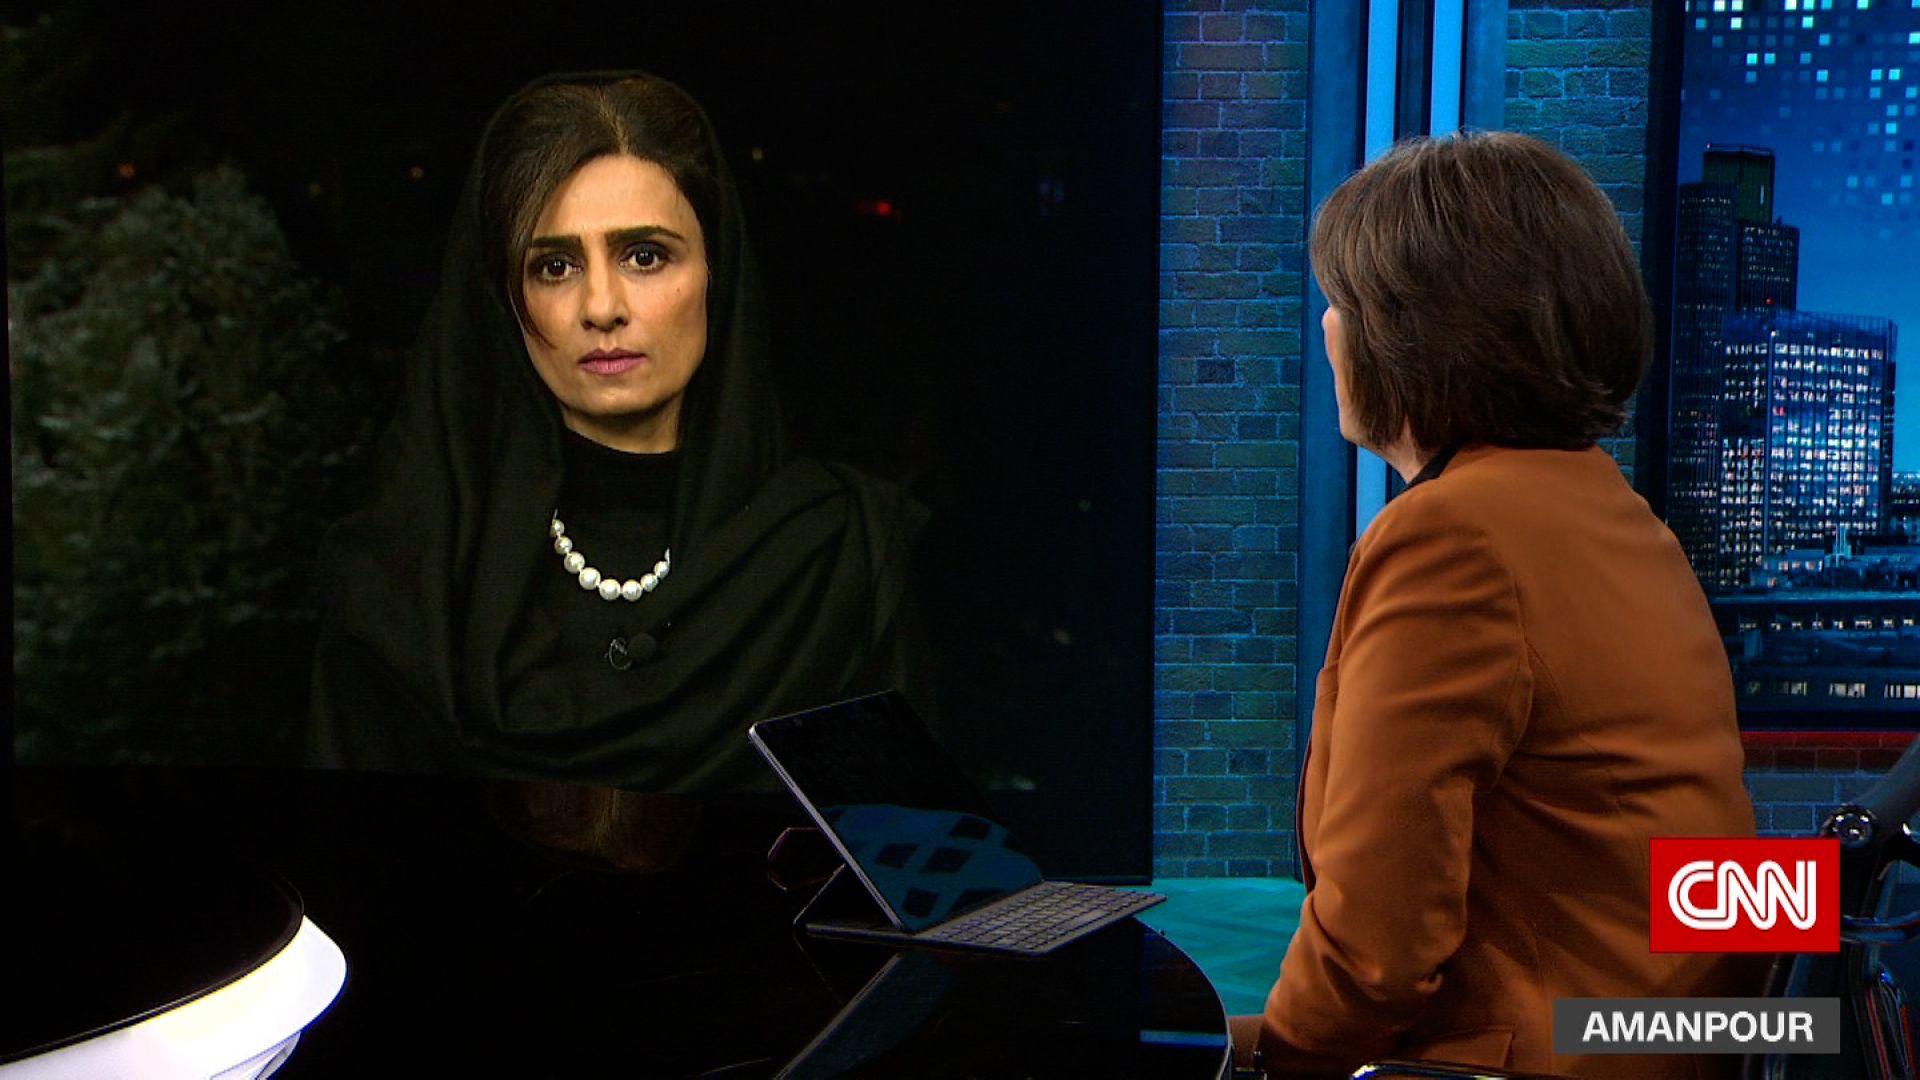 Hina Rabbani Xxx Video - Climate crisis 'an existential threat,' says Pakistani official at Davos |  CNN